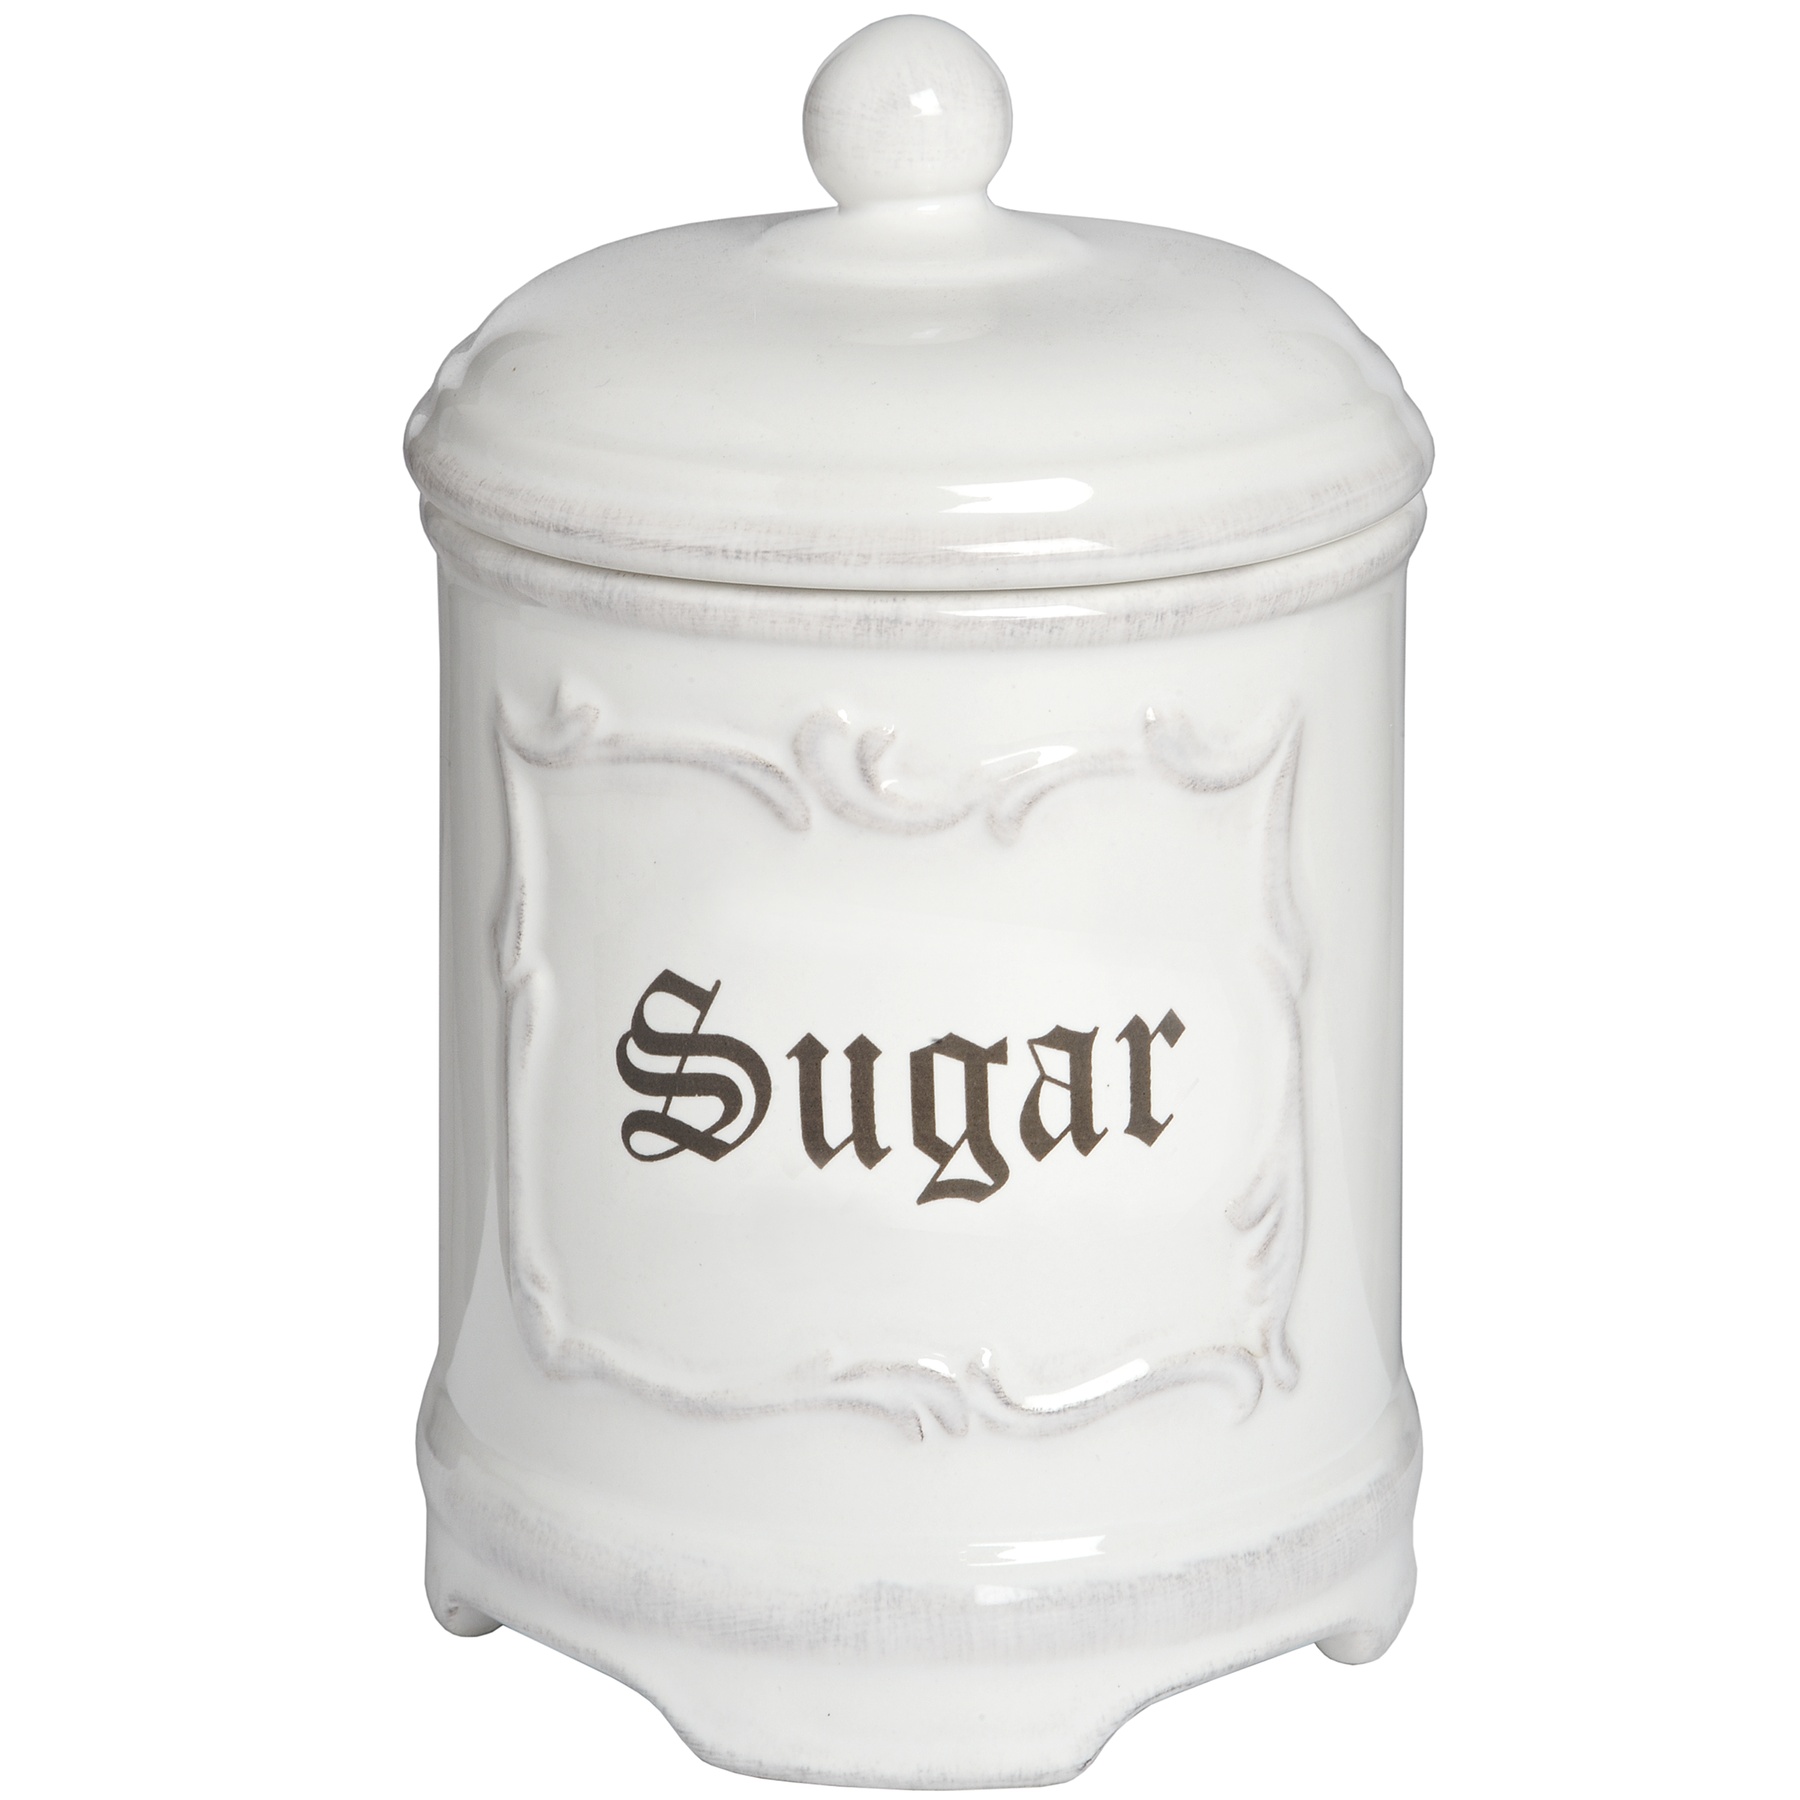 Sugar Cannister - Image 1